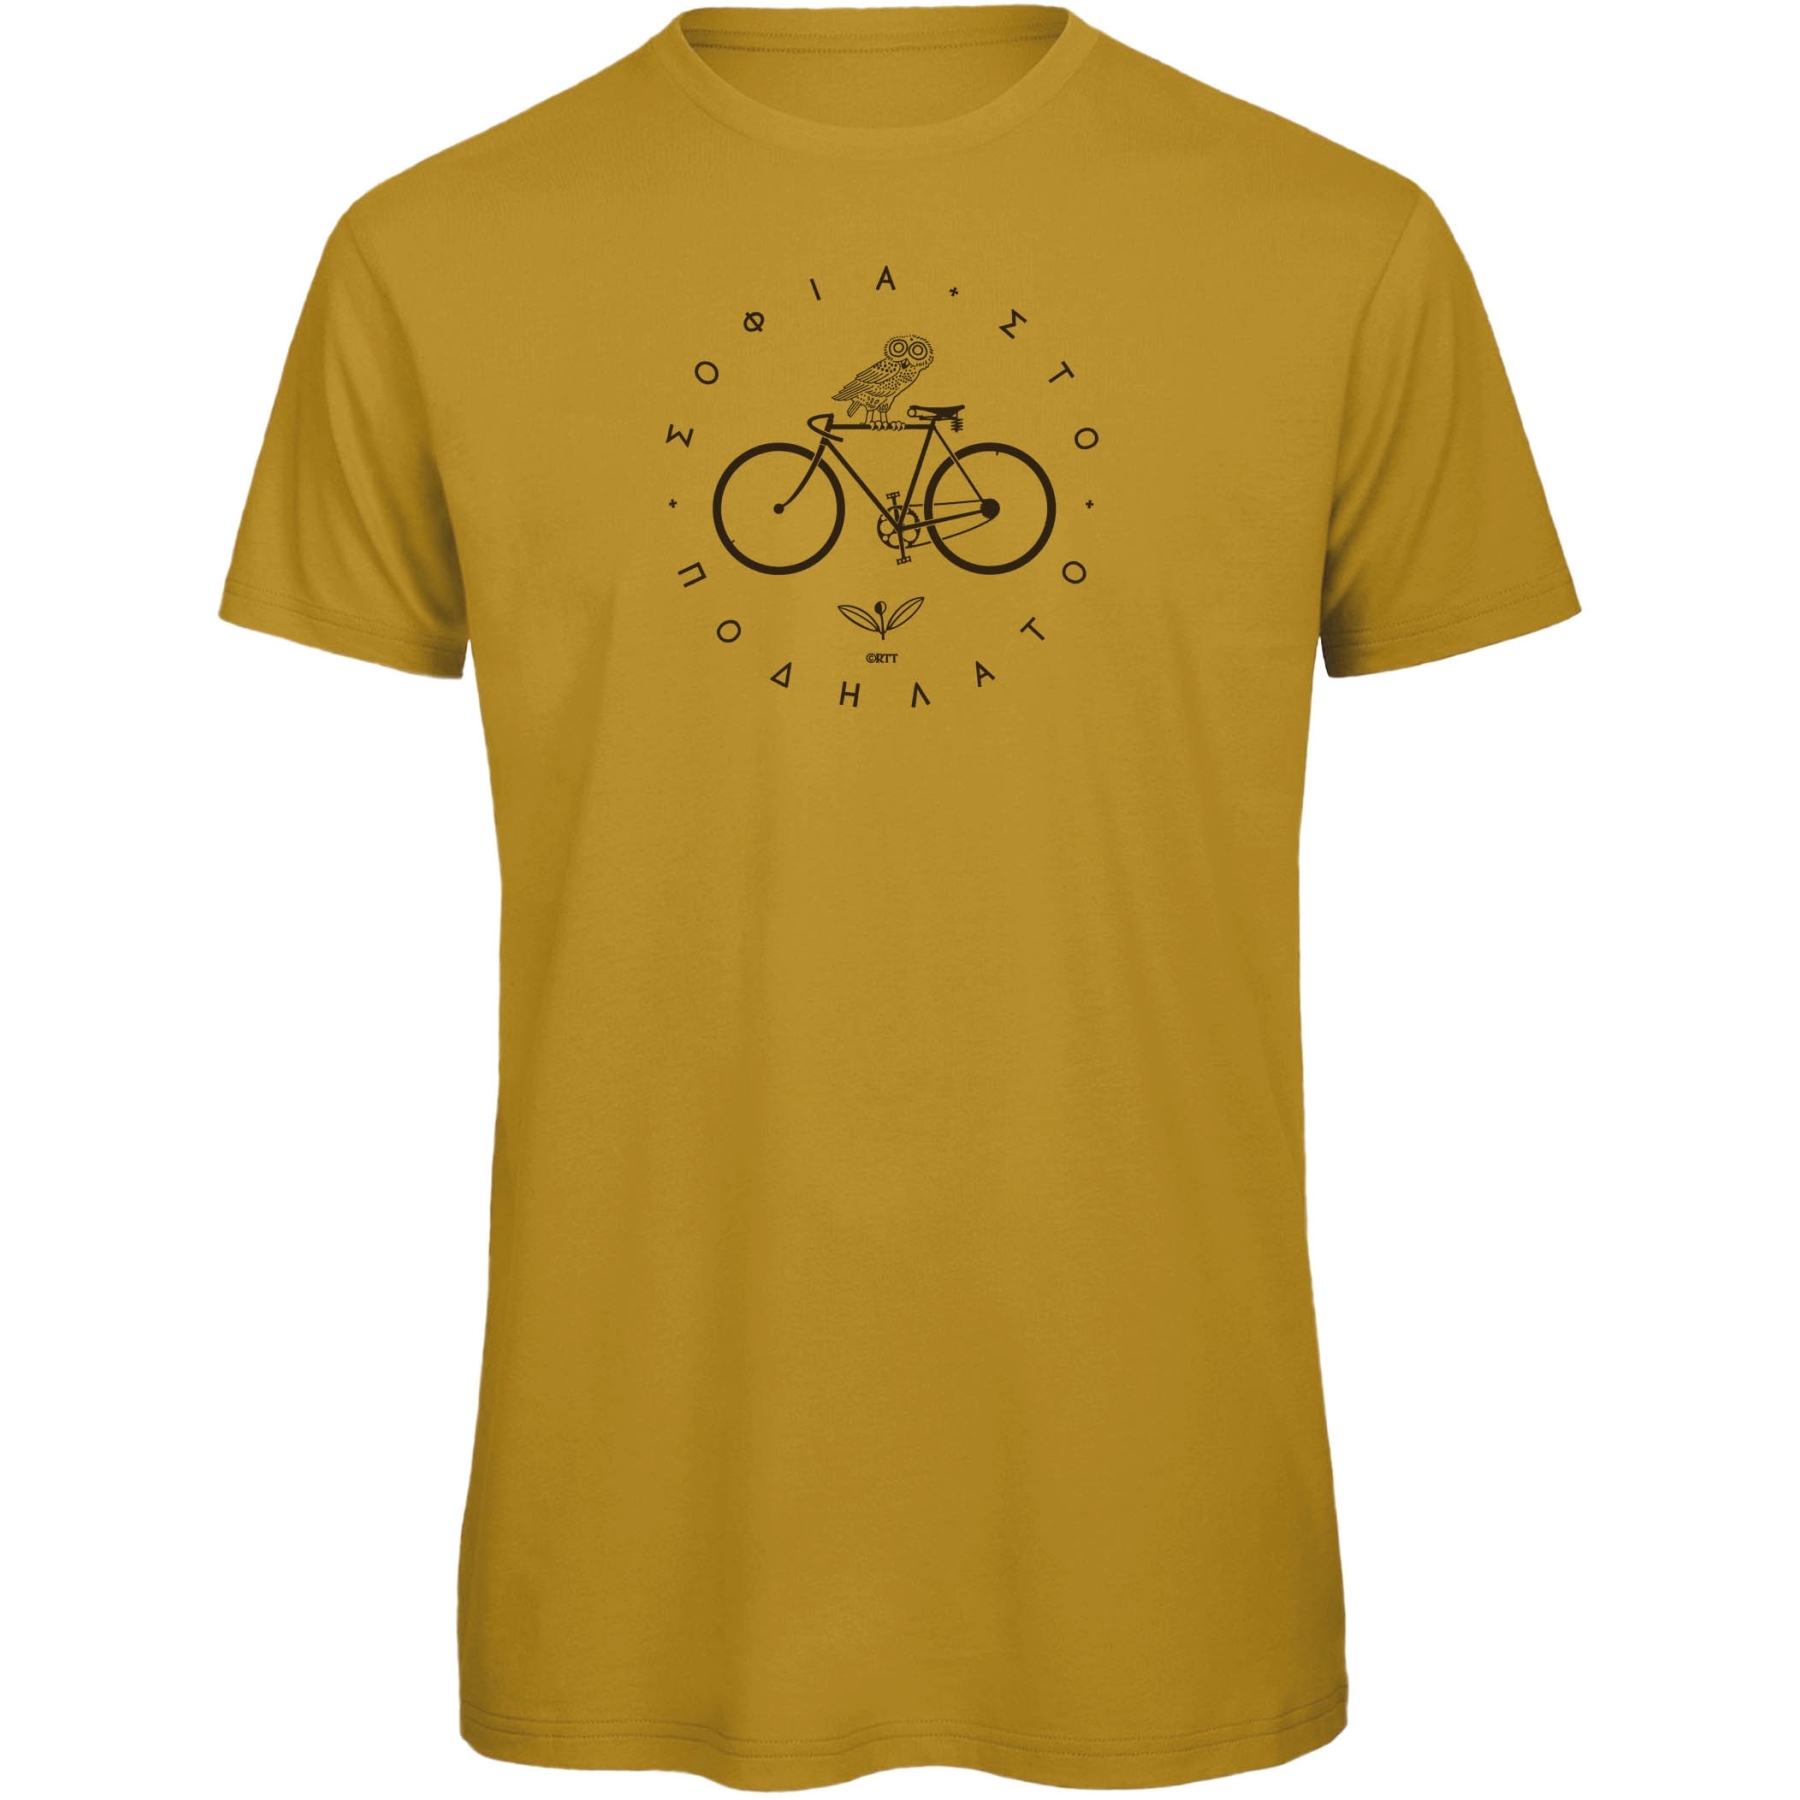 Produktbild von RTTshirts Fahrrad T-Shirt Minerva - ocker